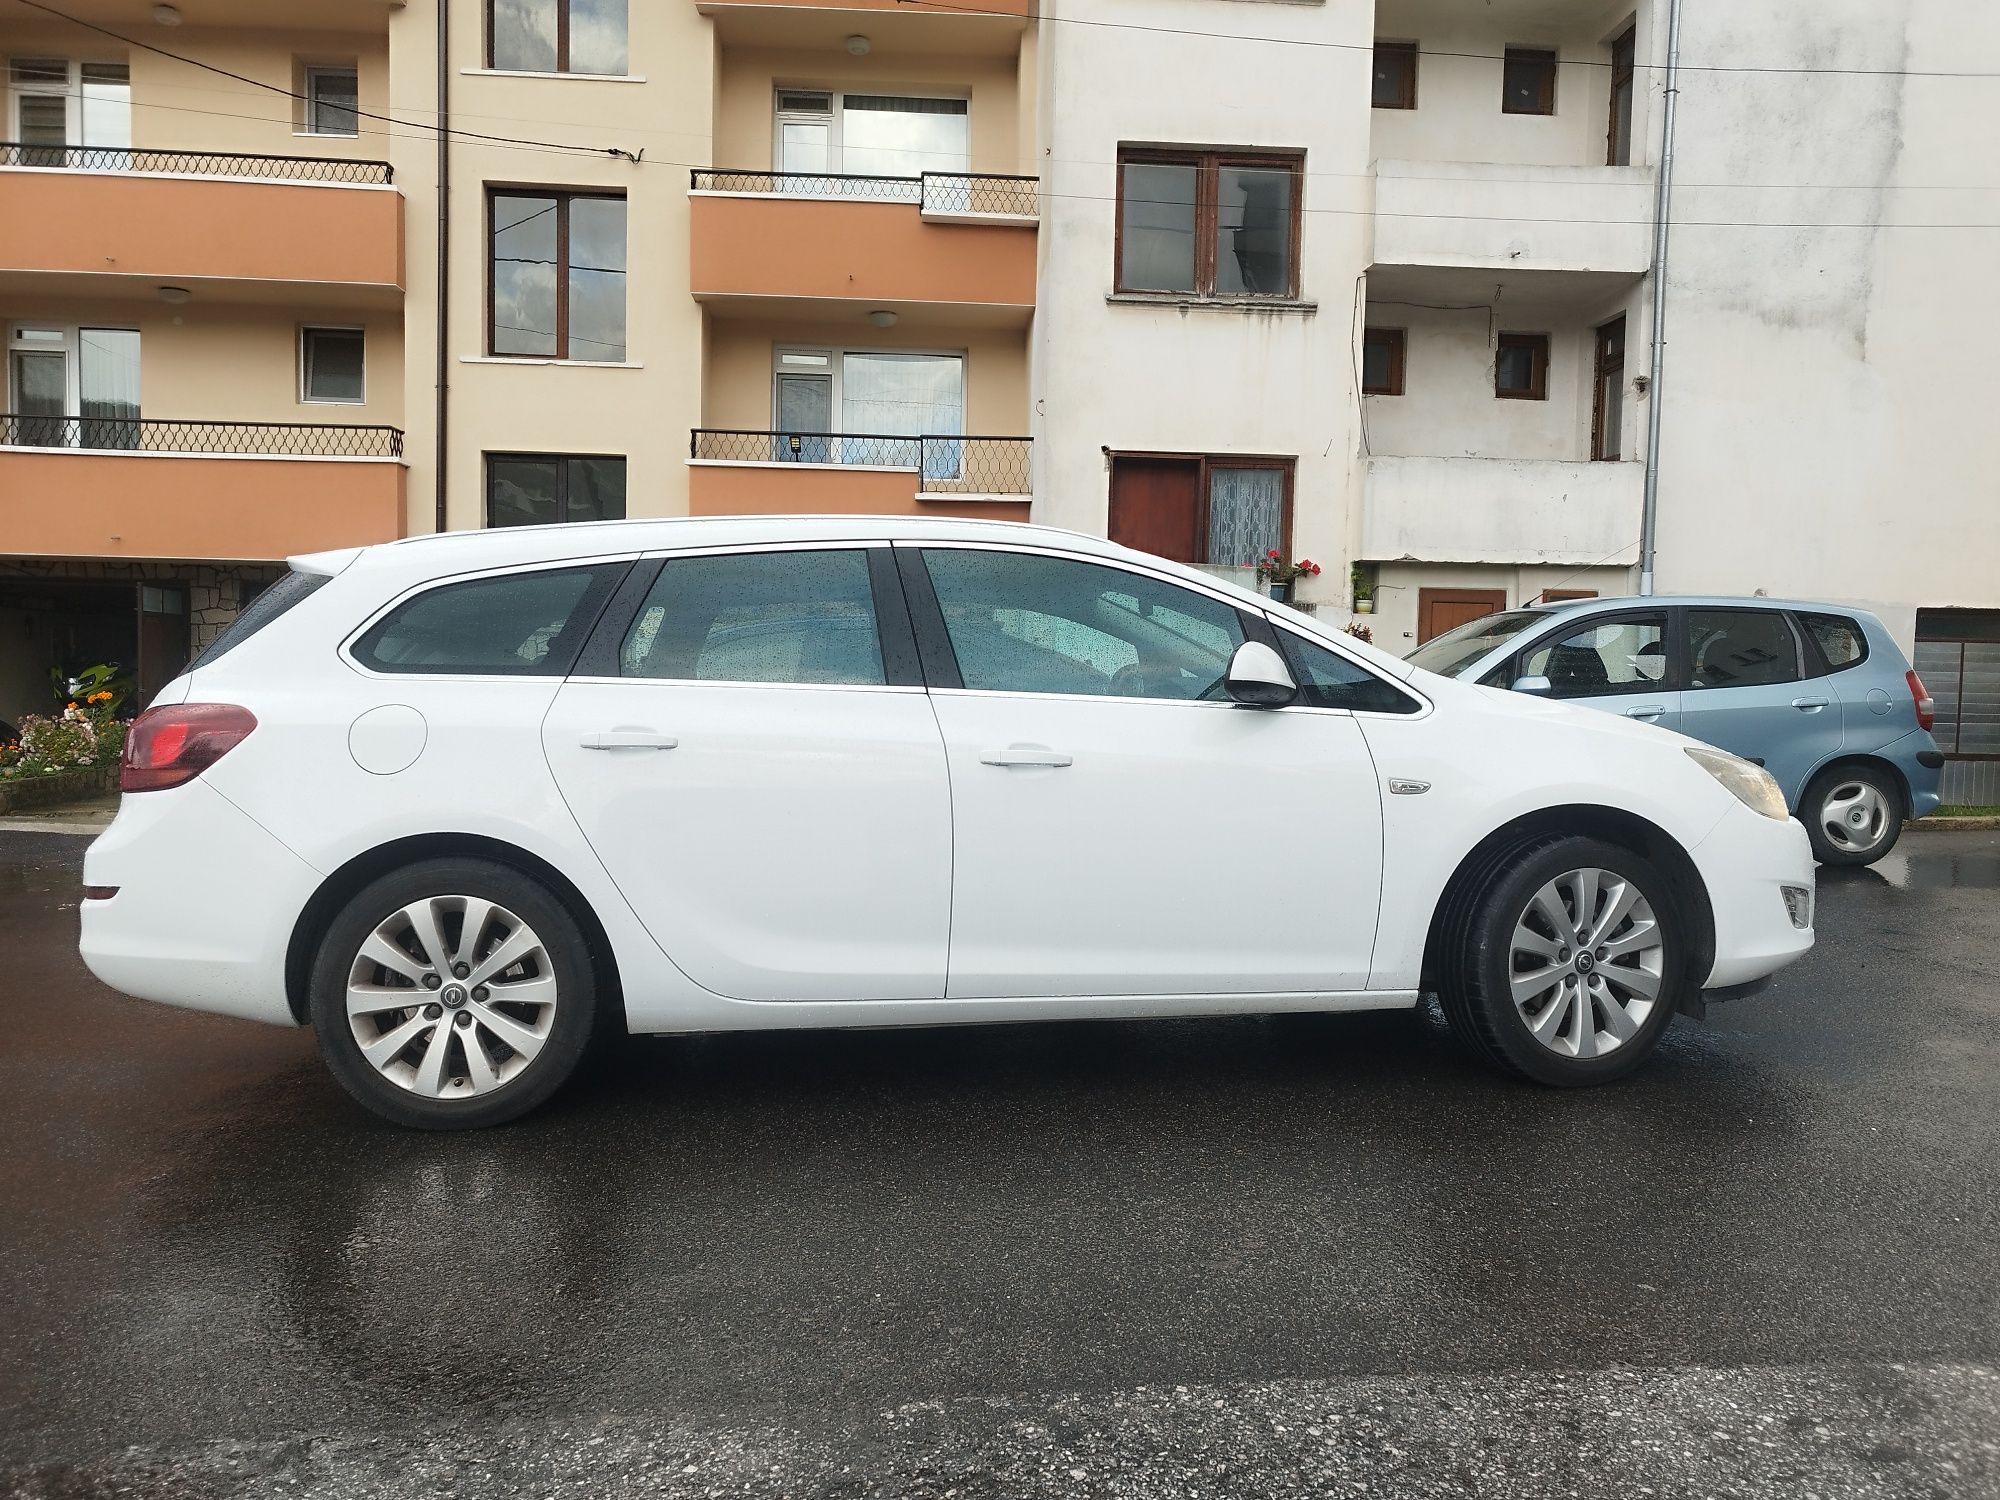 Opel Astra J 1.7 CDTI 110к.с